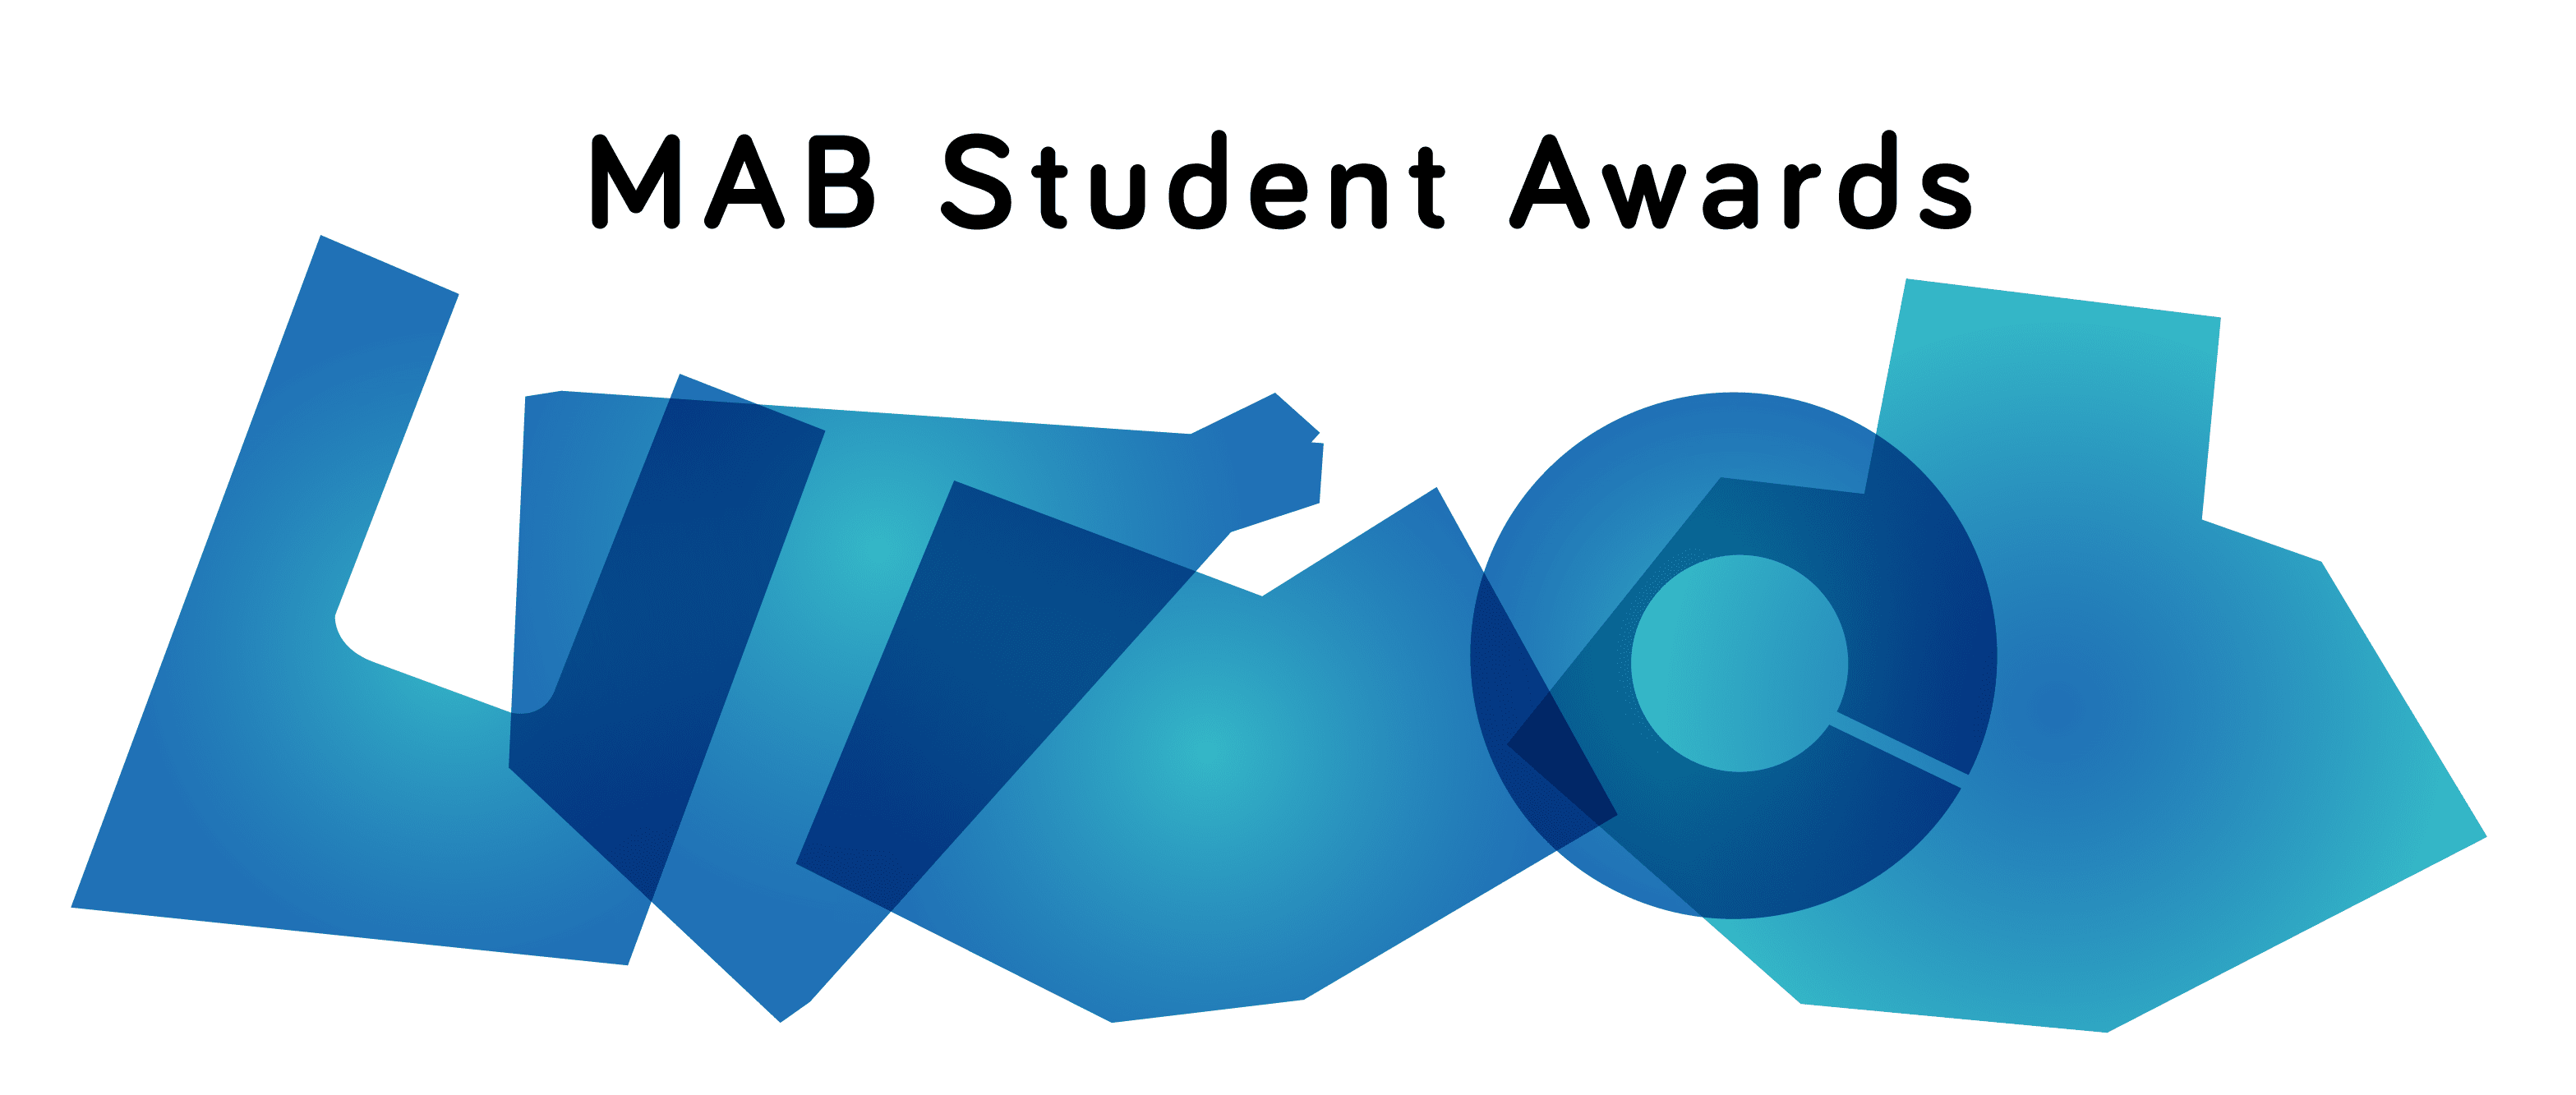 Call for MAB Student Awards